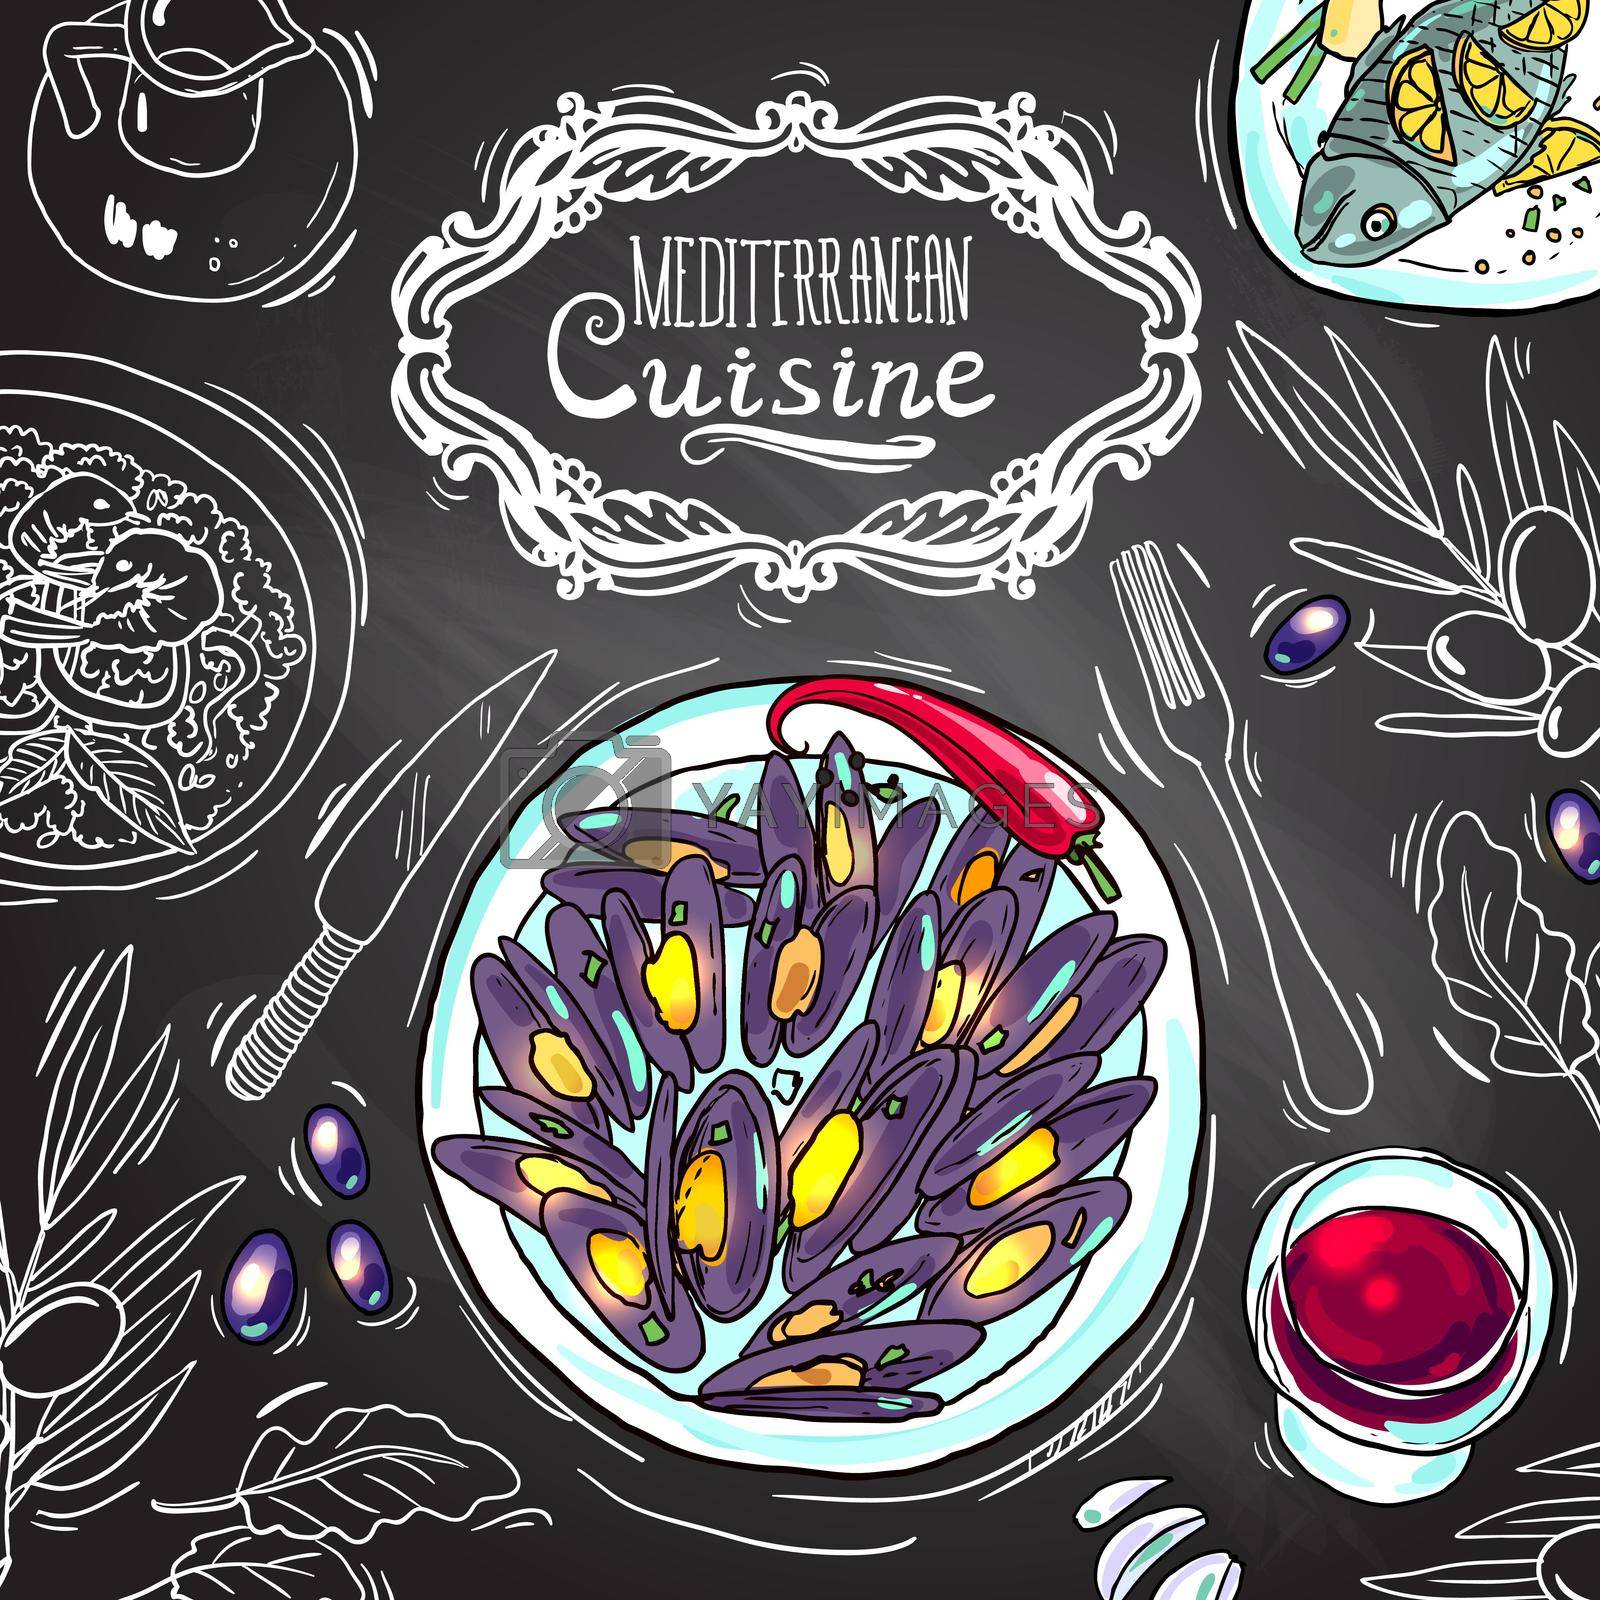 Beautiful hand drawn illustration mediterranean cuisine on the chalkboard